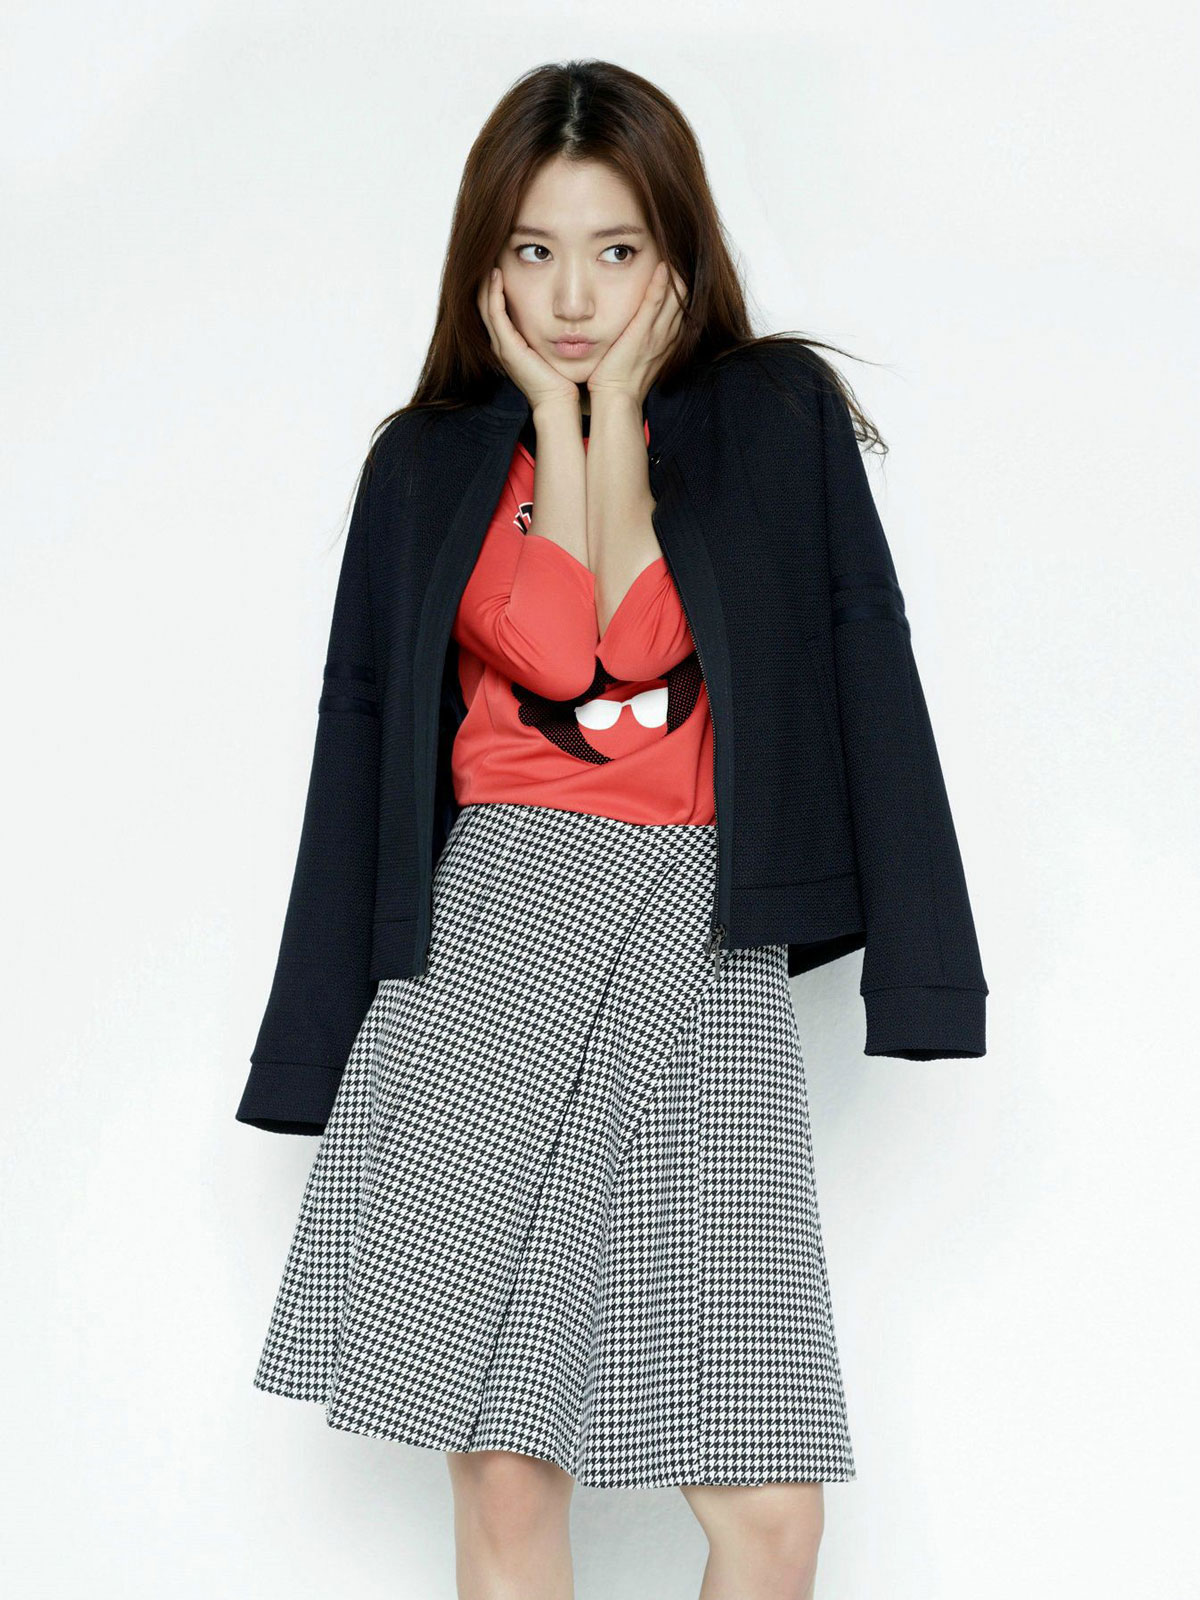 Park Shin Hye Viki clothing advertisement